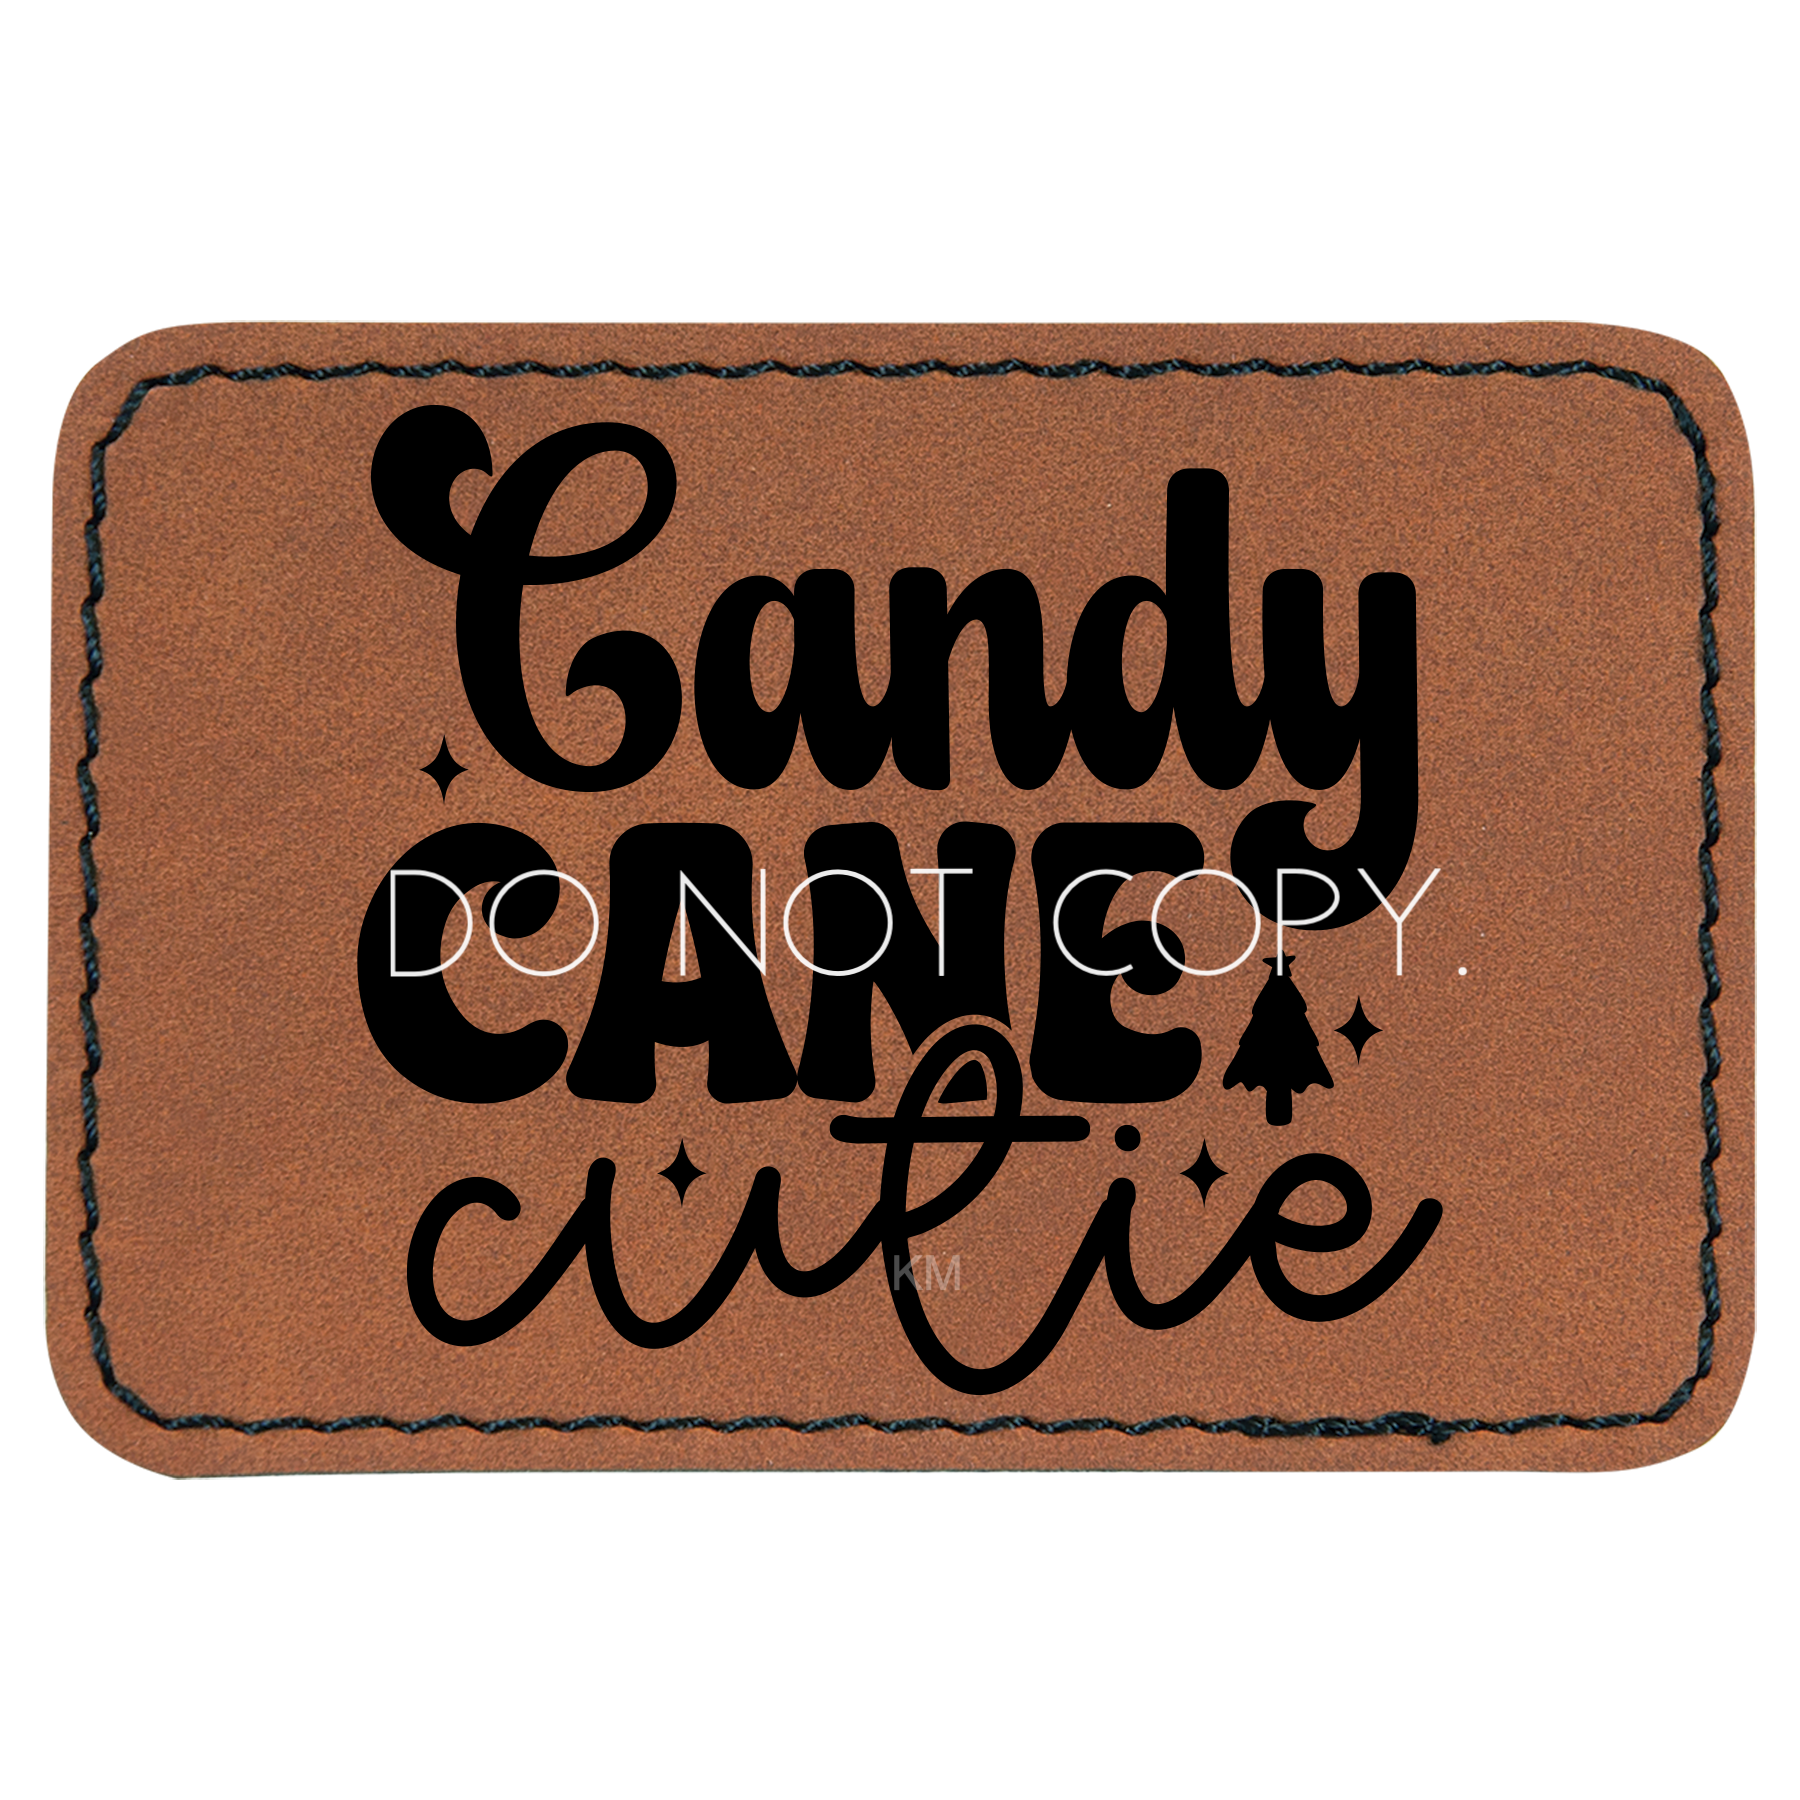 Candy Cane Cutie Patch